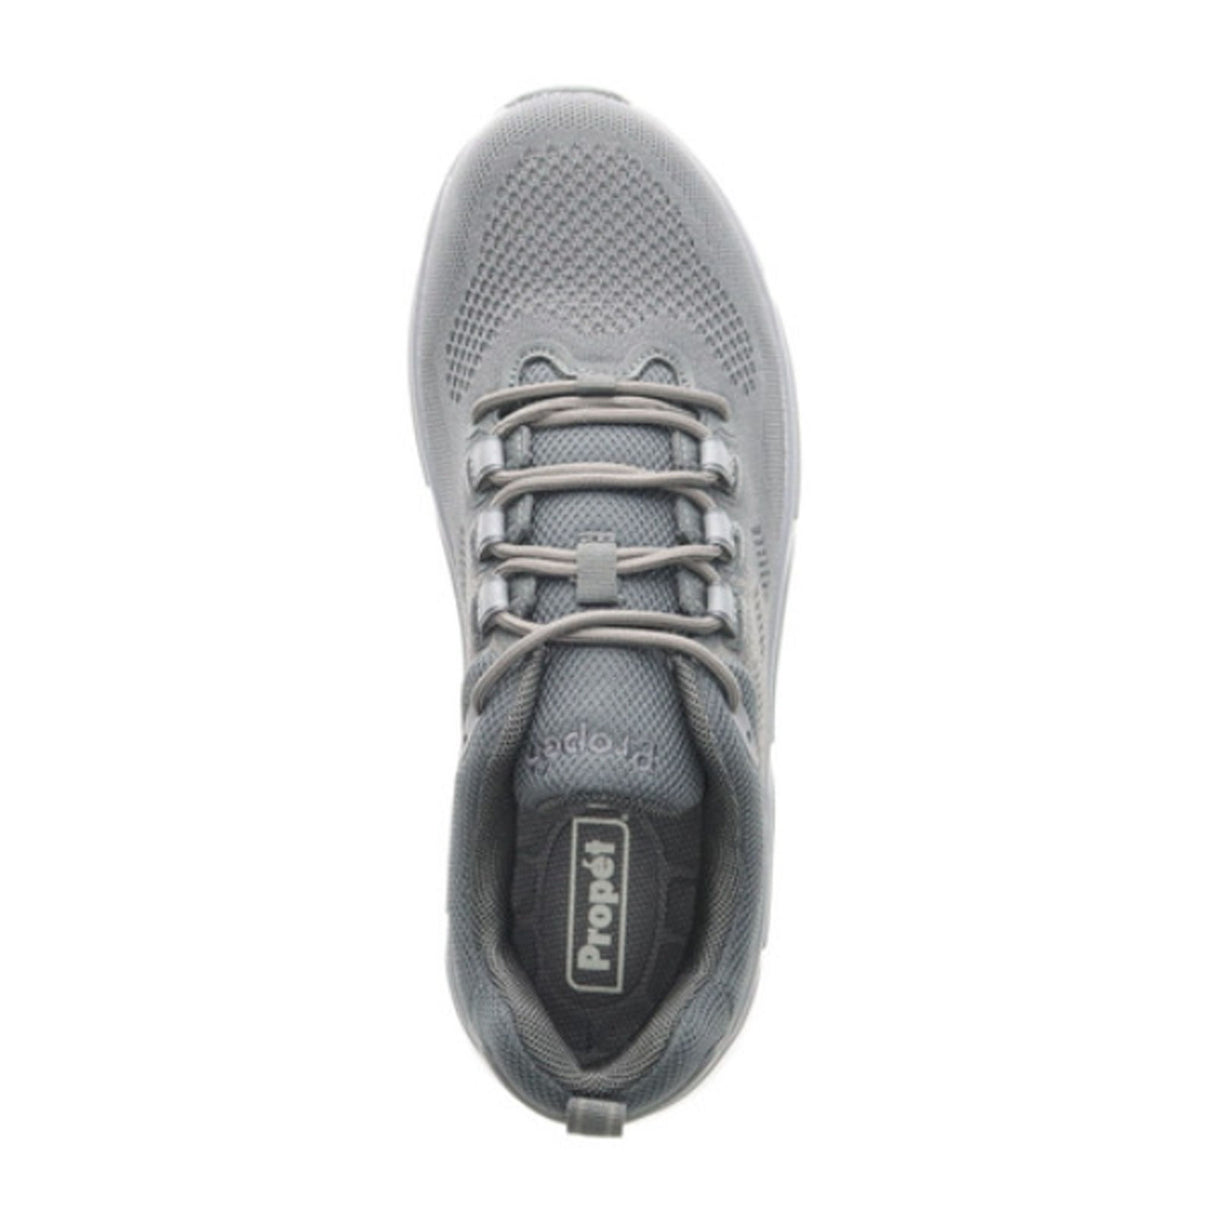 Propet Ultra 267 Running Shoe (Men) - Gunsmoke/Grey Athletic - Running - The Heel Shoe Fitters